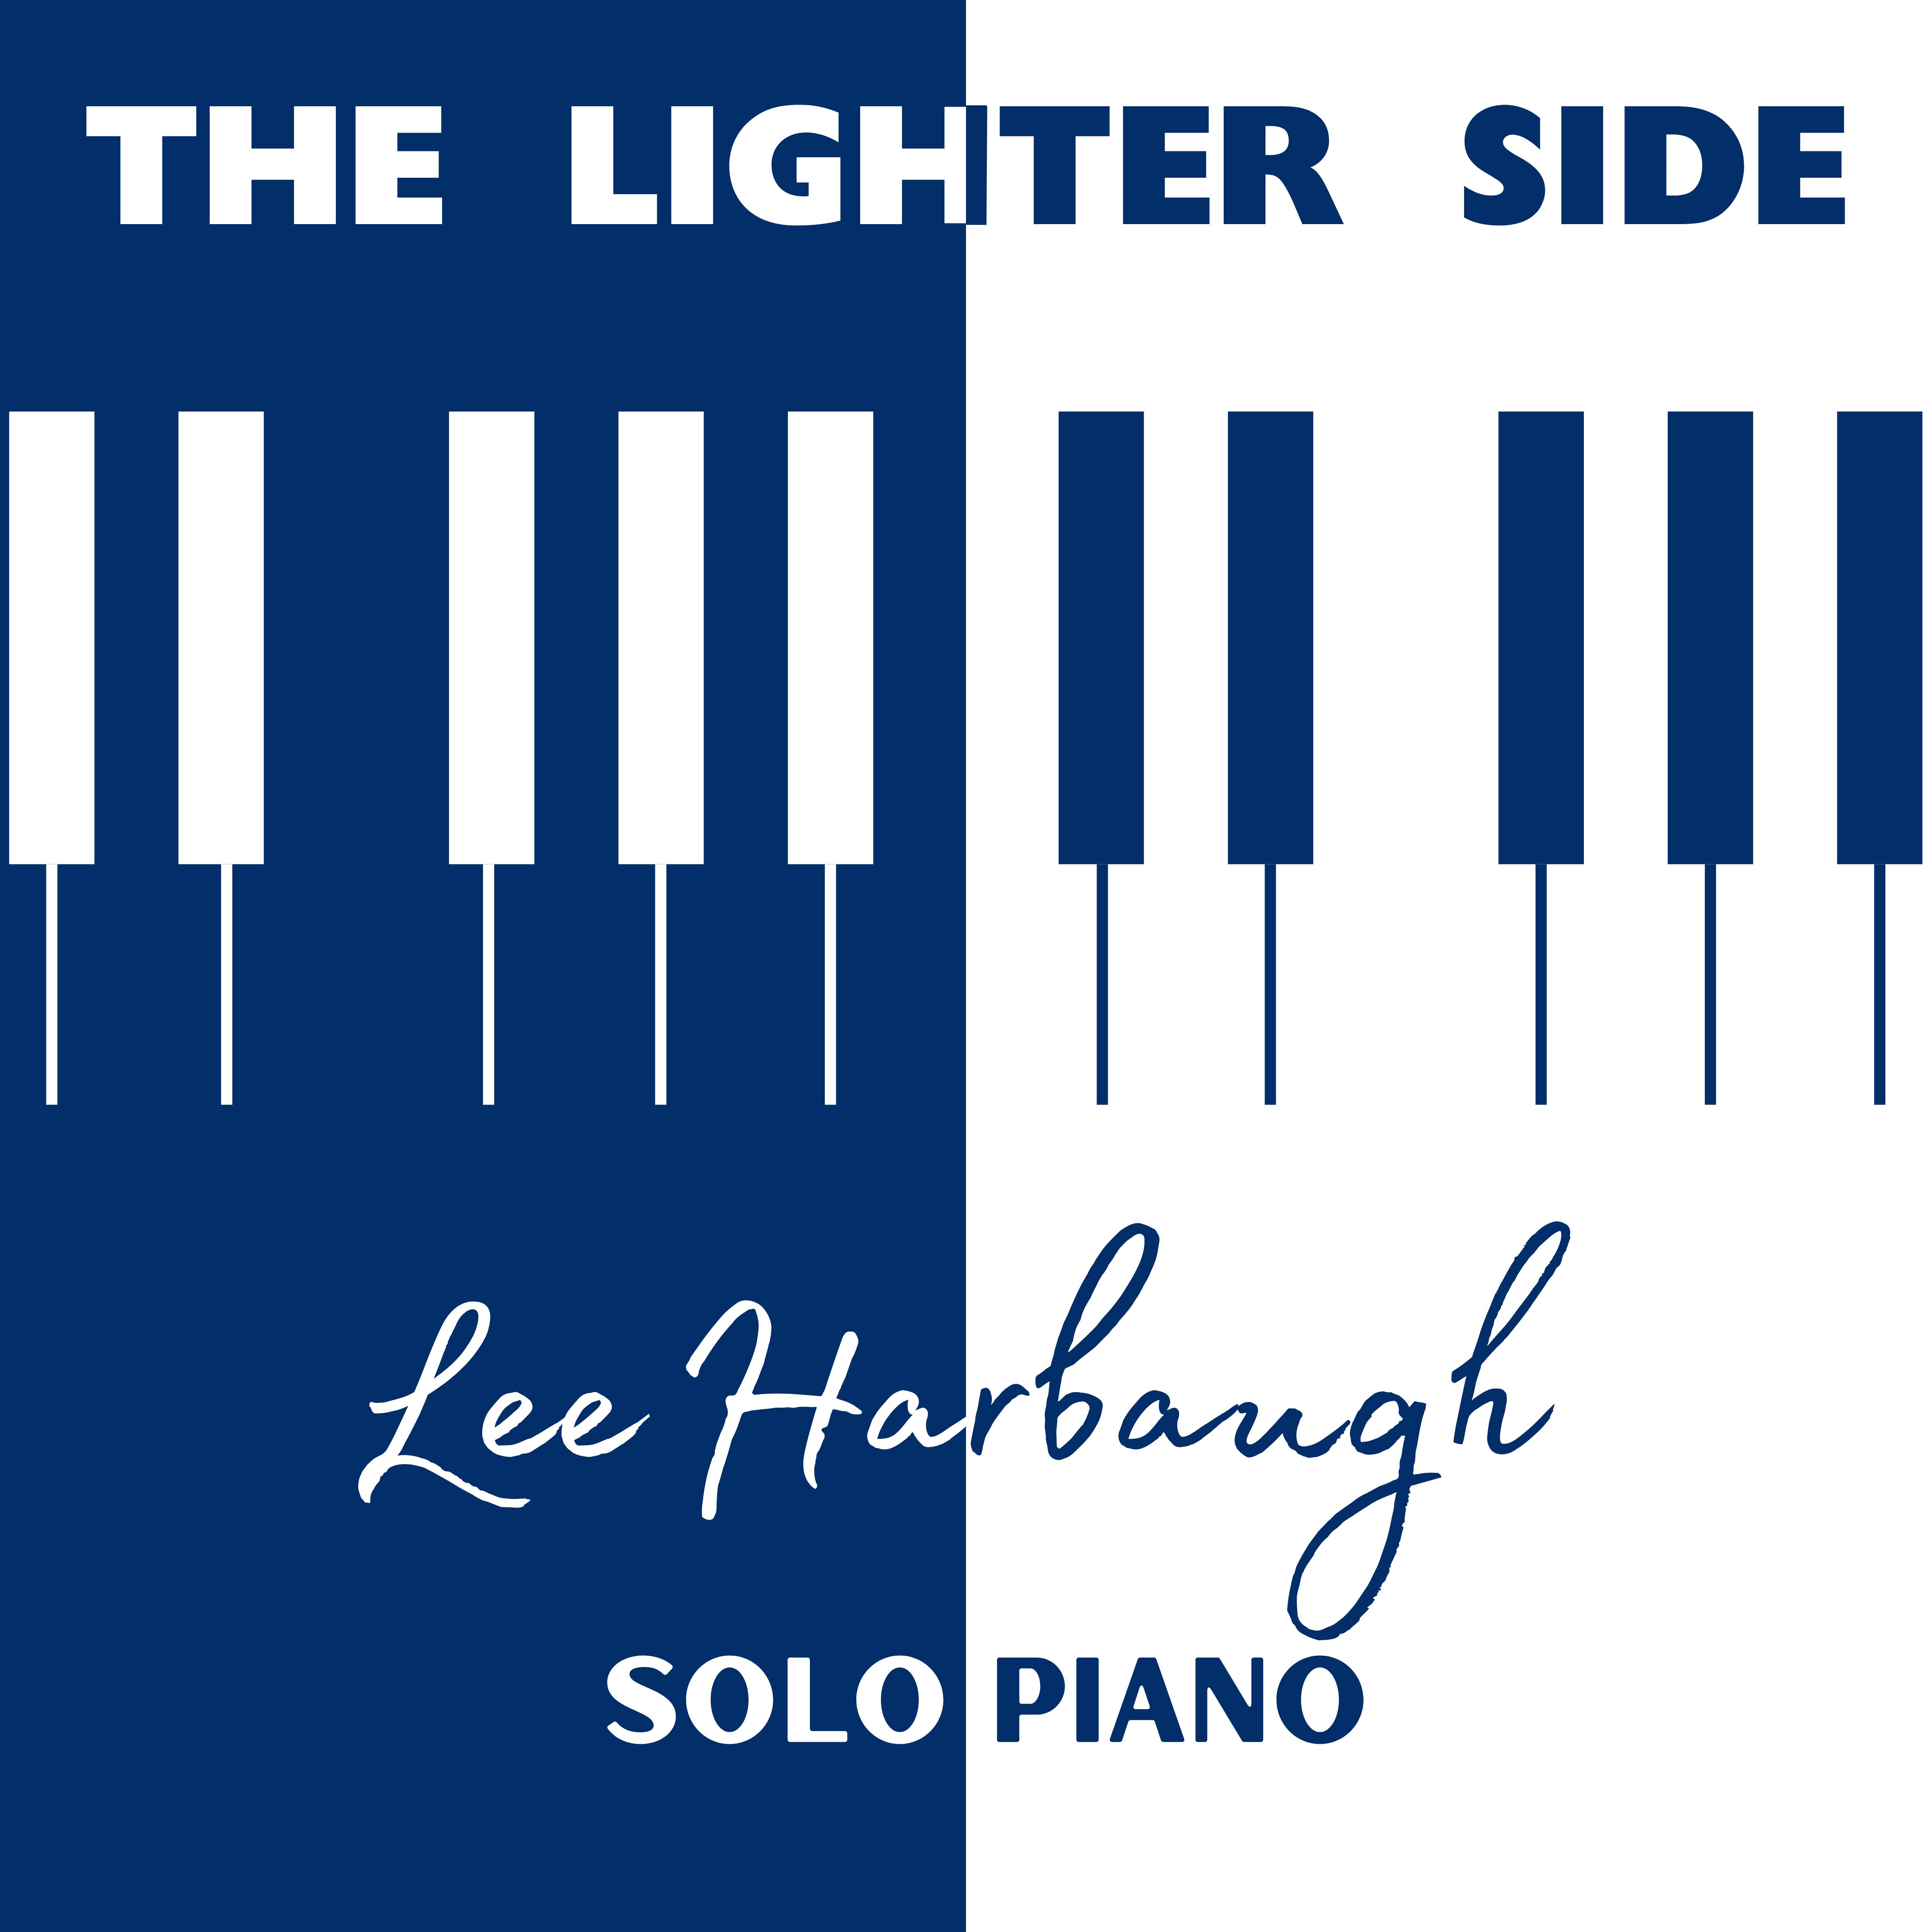 The Lighter Side Album Cover